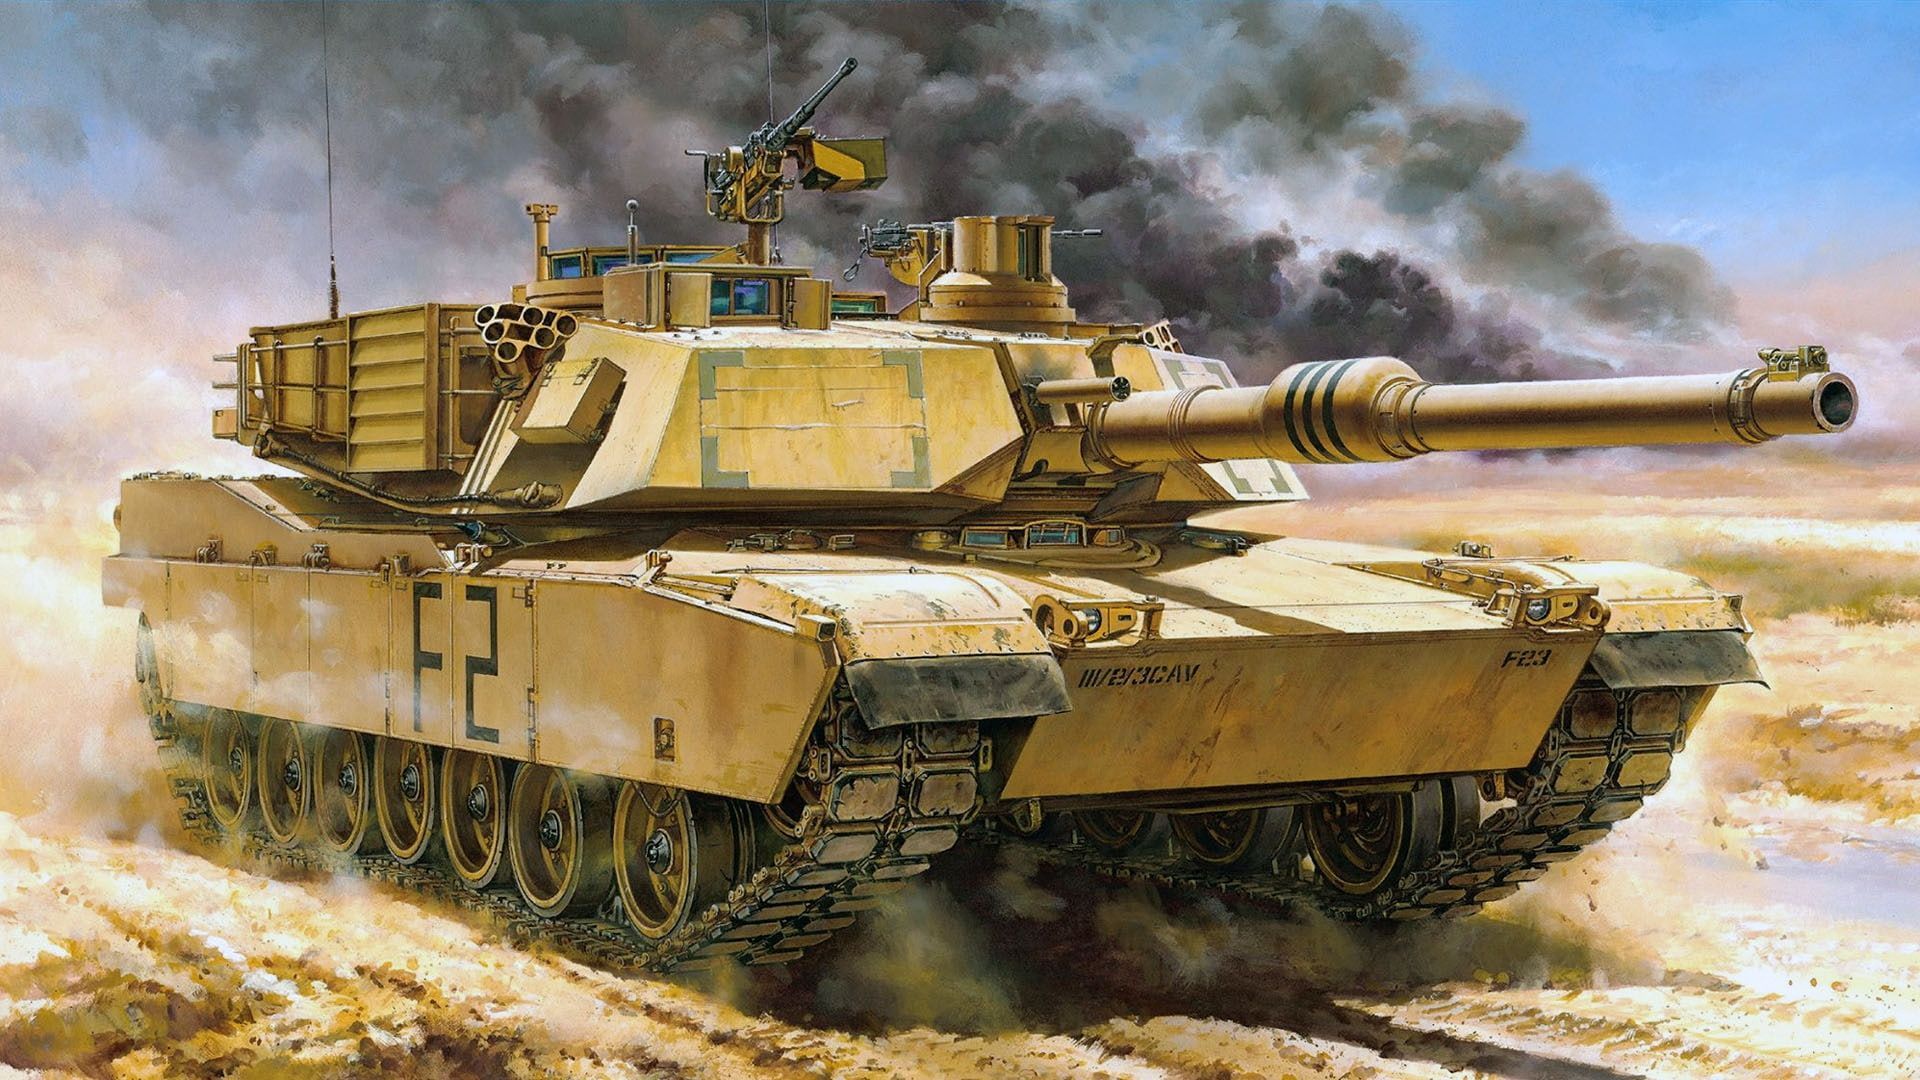 USA #Abrams #Abrams main battle tank .com